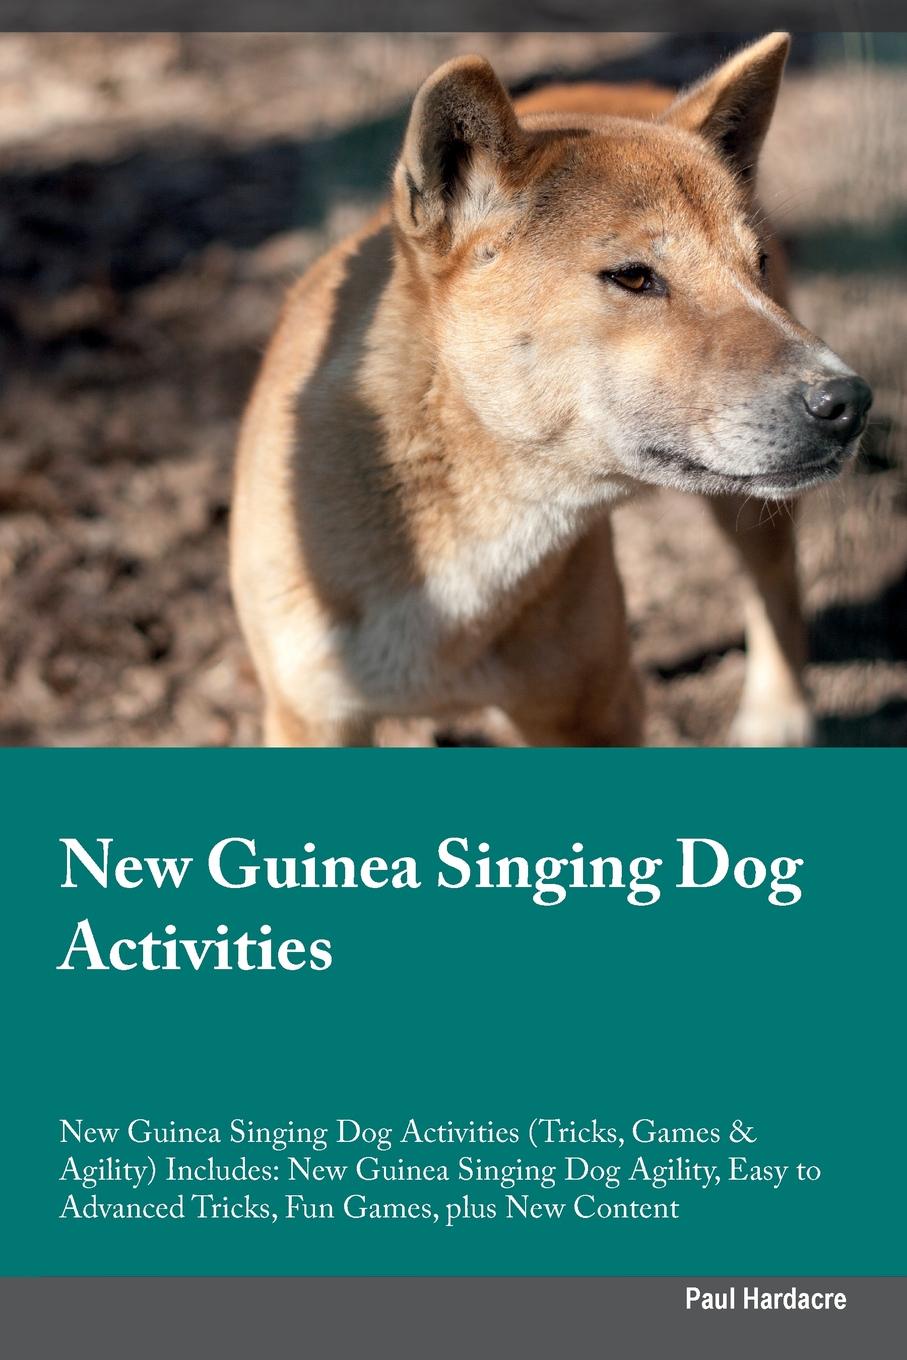 New Guinea Singing Dog Activities New Guinea Singing Dog Activities (Tricks, Games & Agility) Includes. New Guinea Singing Dog Agility, Easy to Advanced Tricks, Fun Games, plus New Content